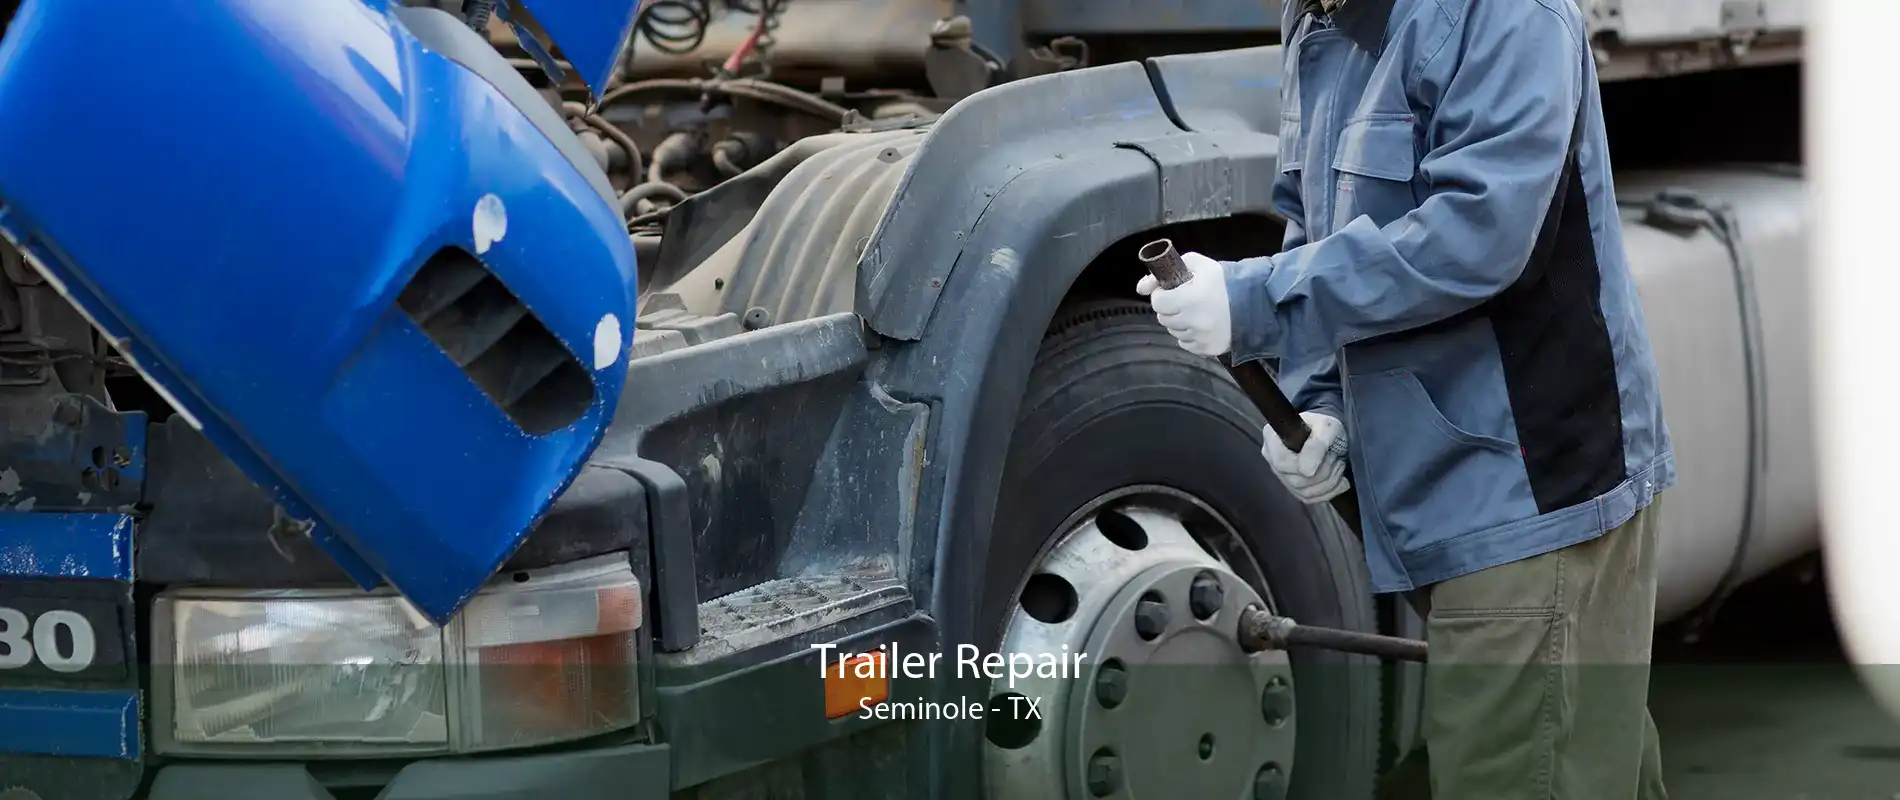 Trailer Repair Seminole - TX